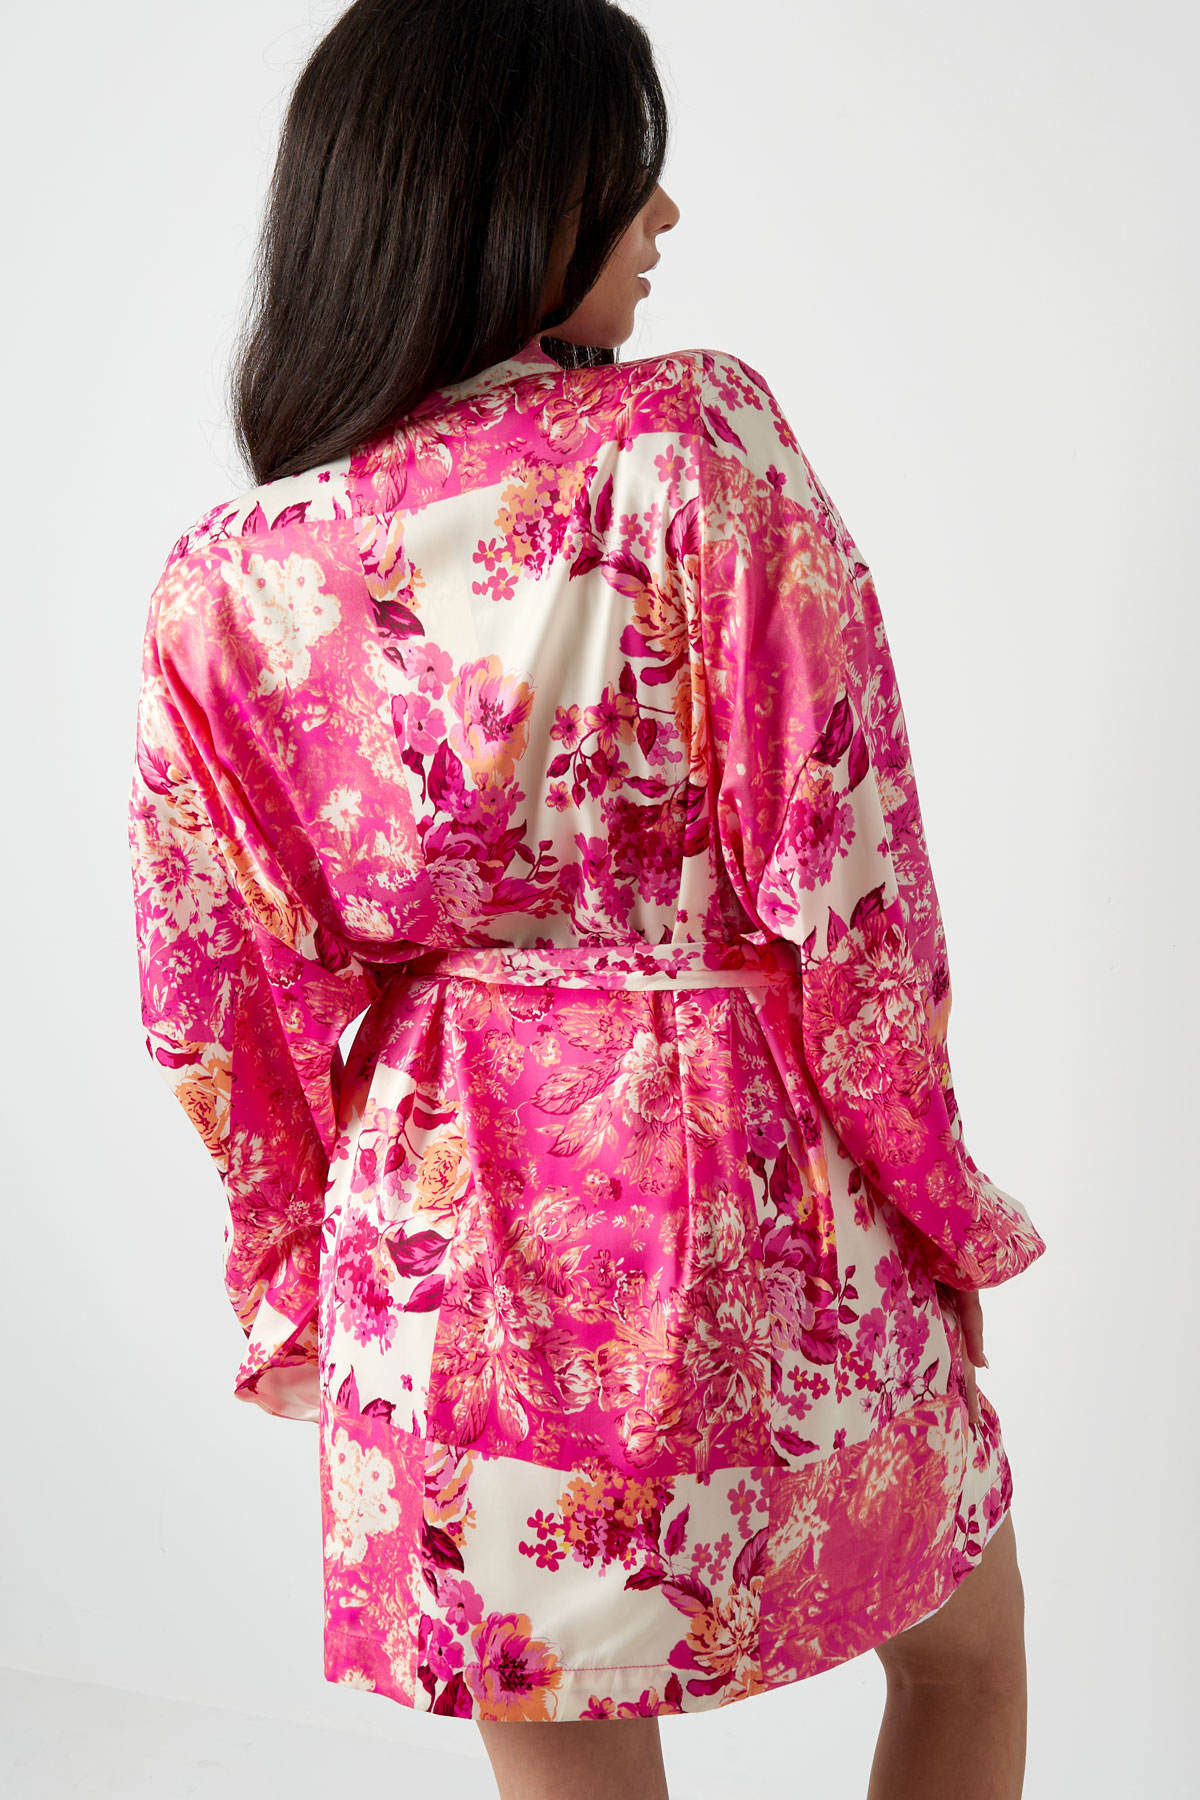 Kimono corto flores verdes - multi h5 Imagen6